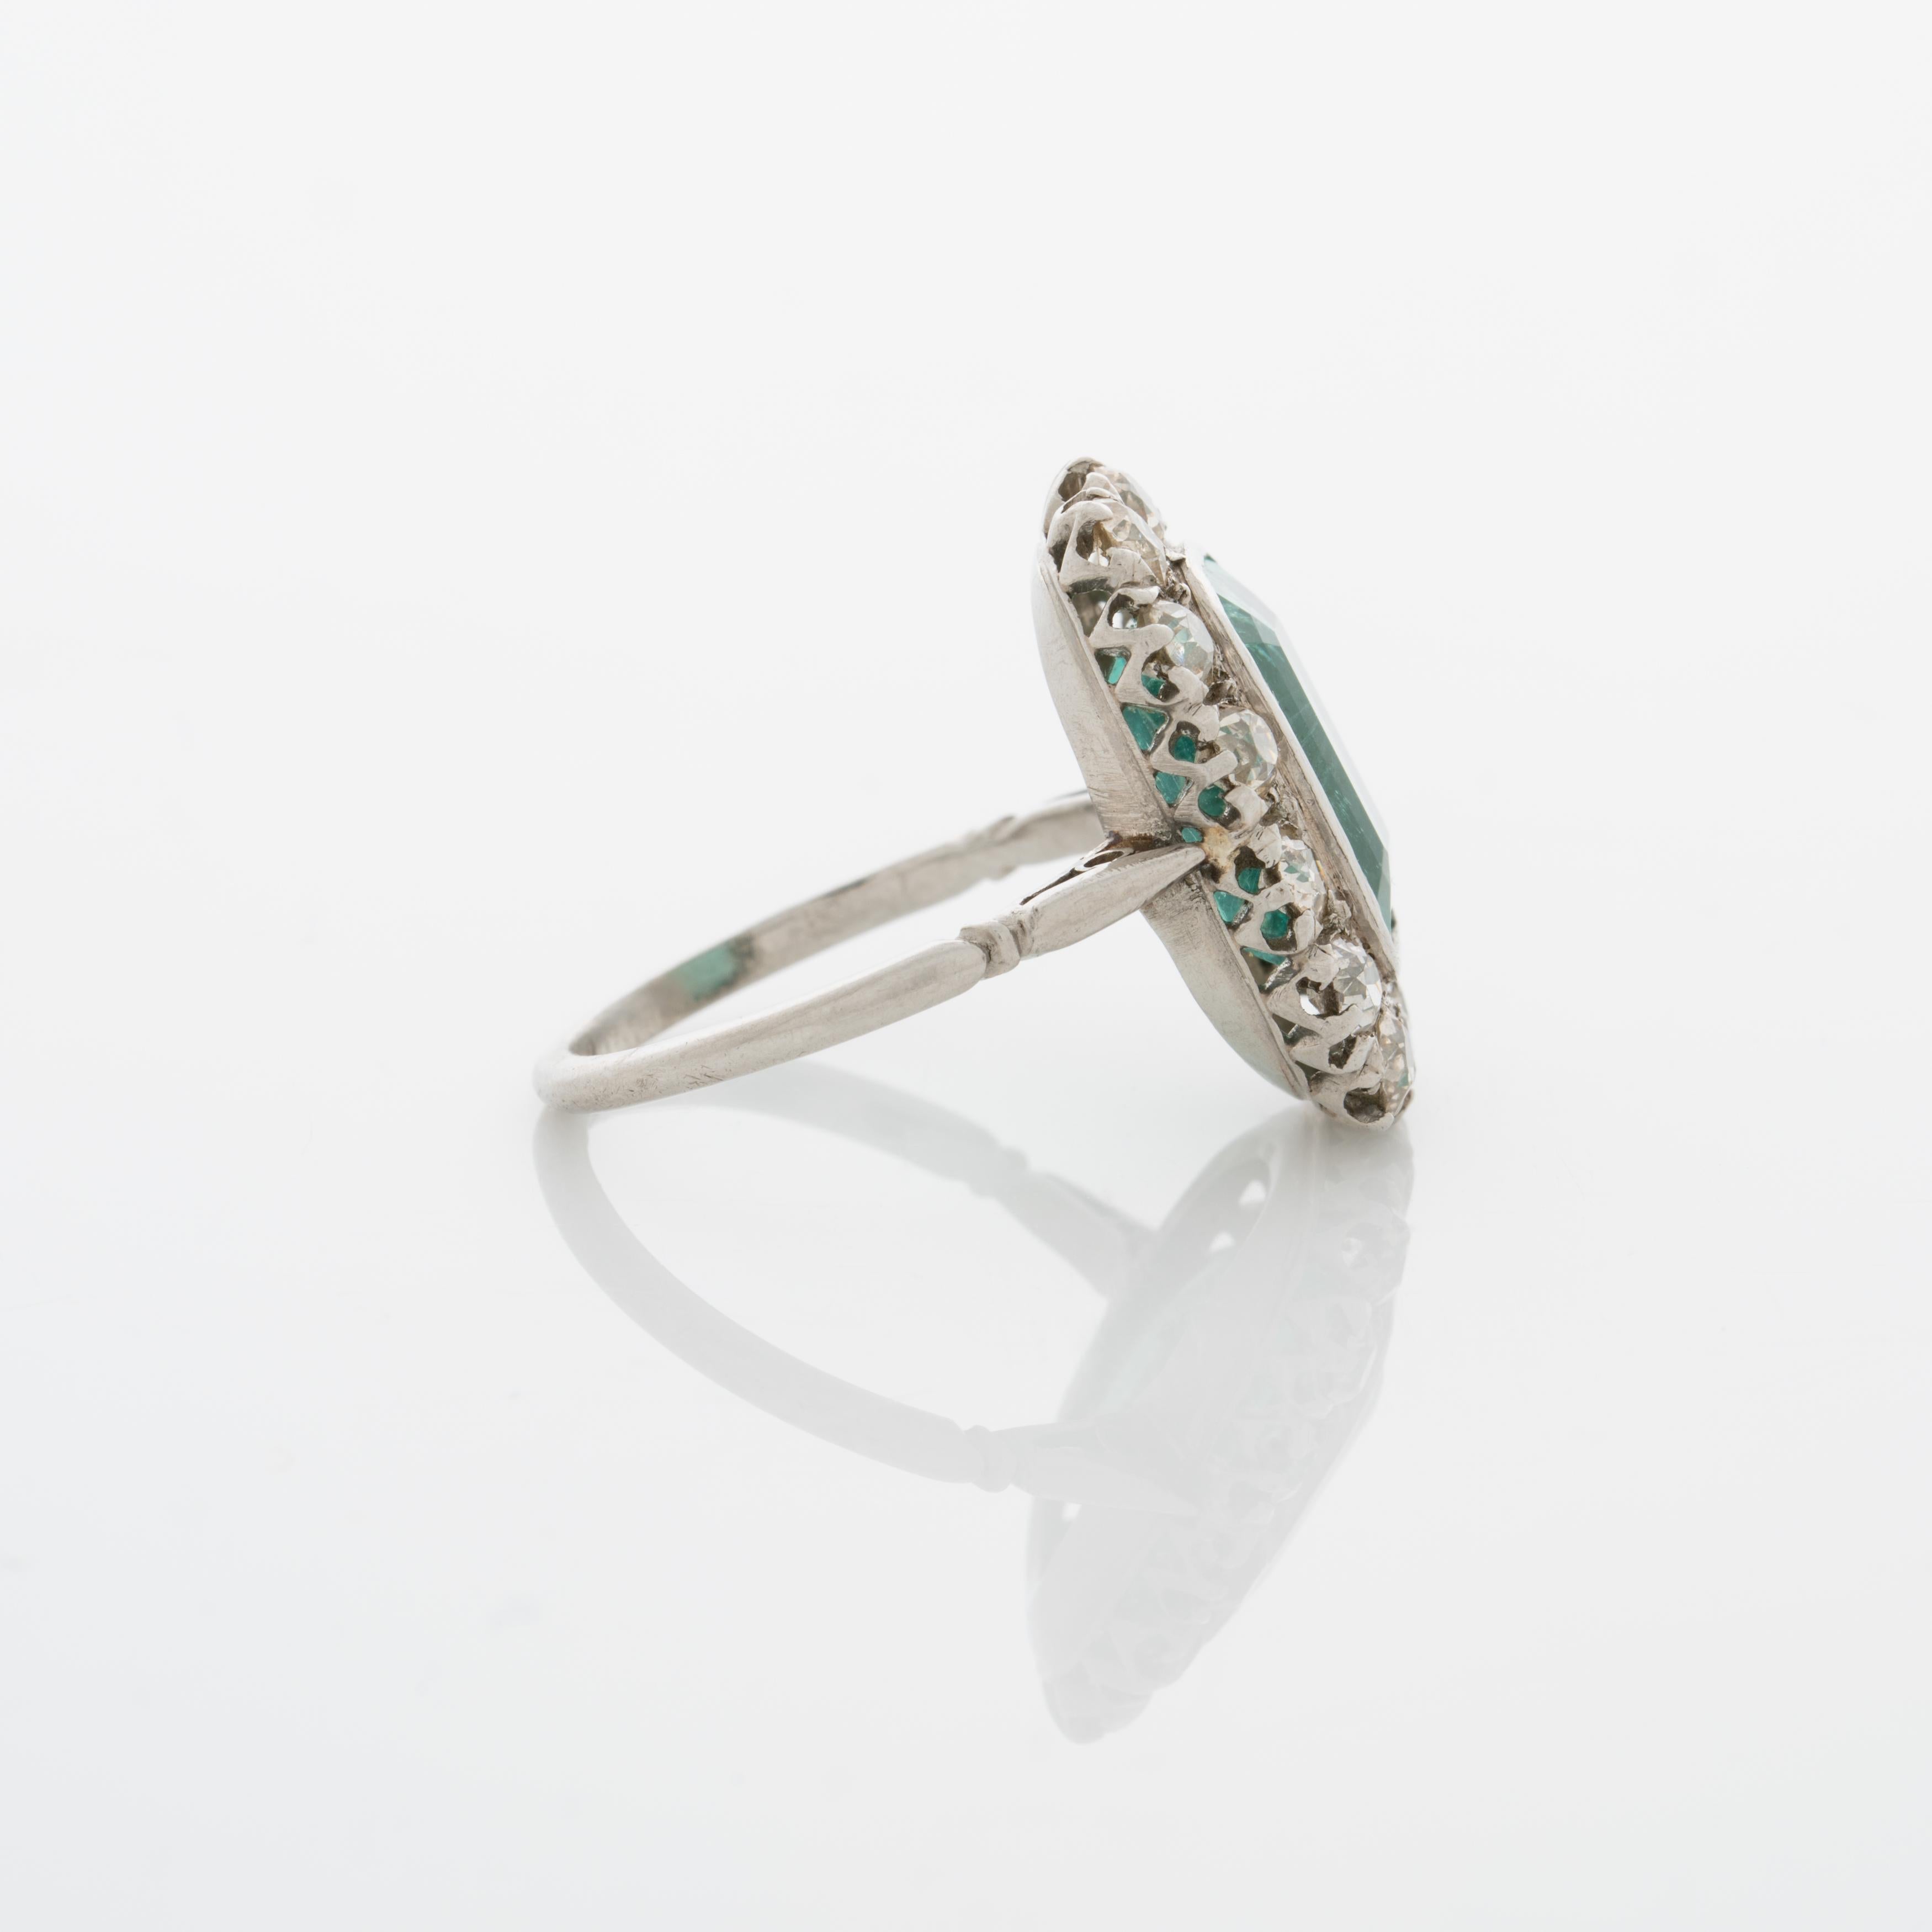 4.5 carat emerald cut diamond ring